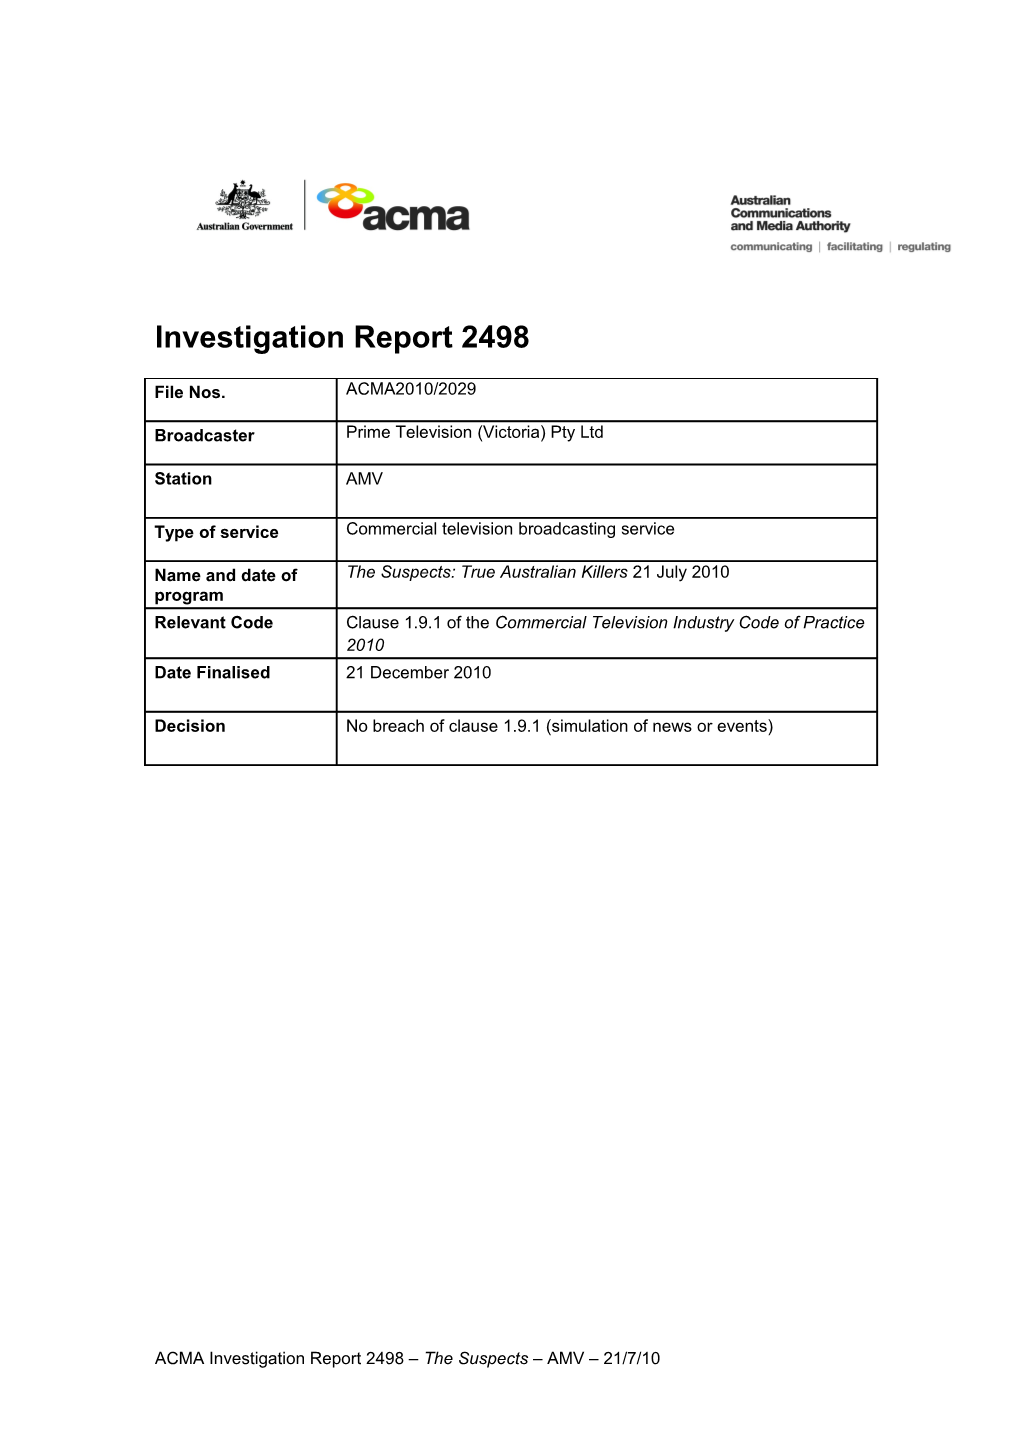 AMV (Prime TV) - ACMA Investigation Report 2498